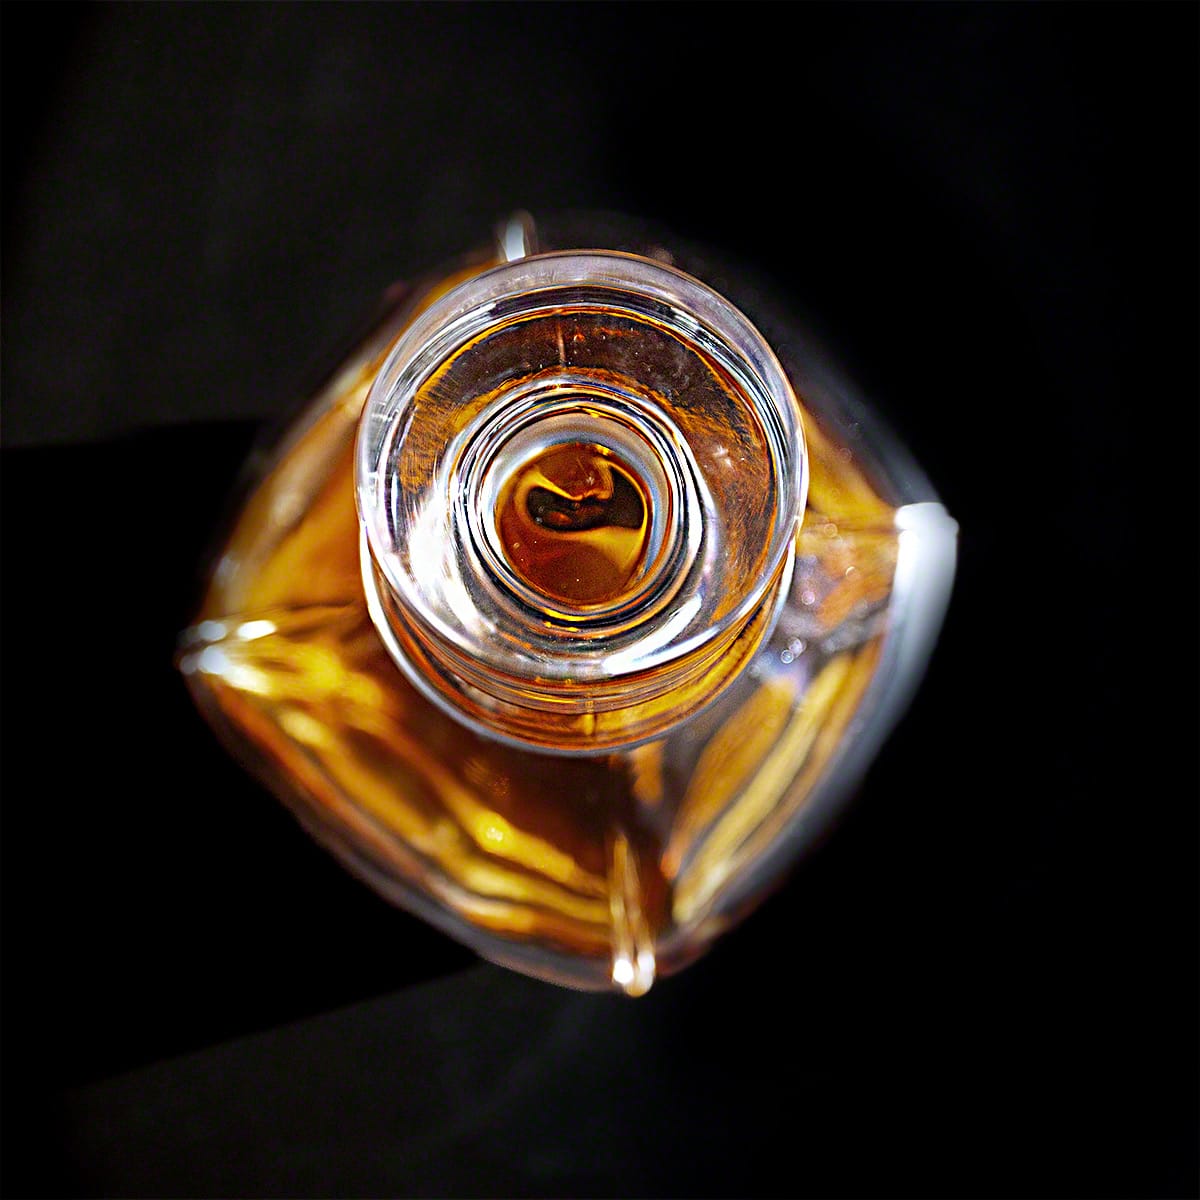 11pc Bourbon & Treats Engraved Gift Set - Luxury Box